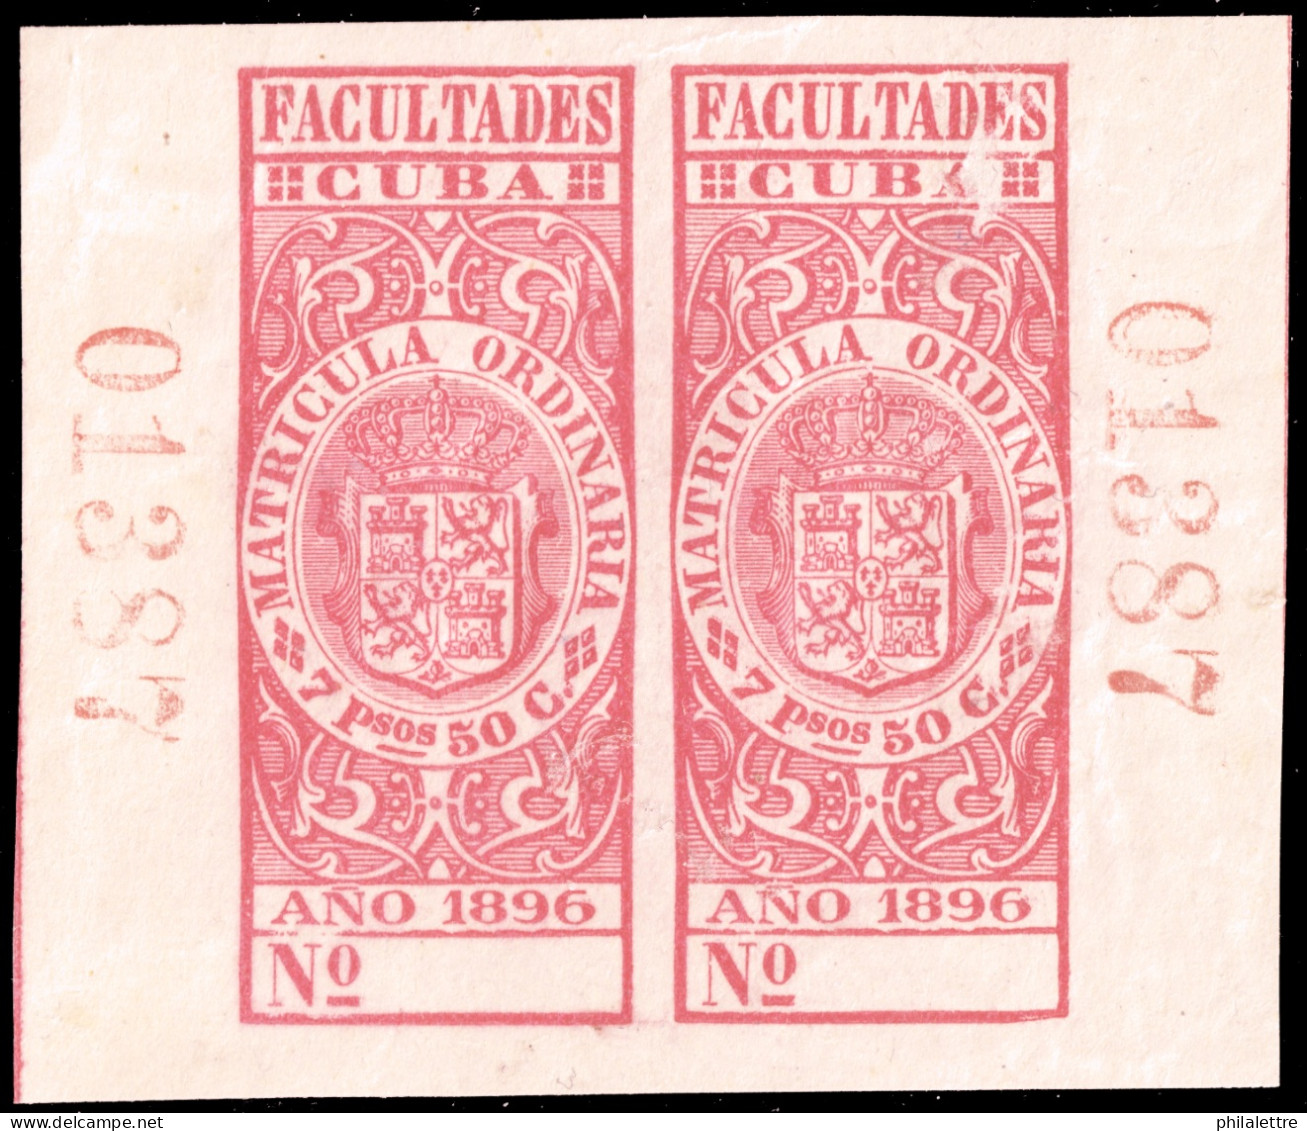 ESPAGNE / ESPANA - COLONIAS (Cuba) 1896 Matricula Ordinaria "FACULTADES" Fulcher 1065 2x 7P50 Rosa (n°01387) - Nuevo* - Kuba (1874-1898)